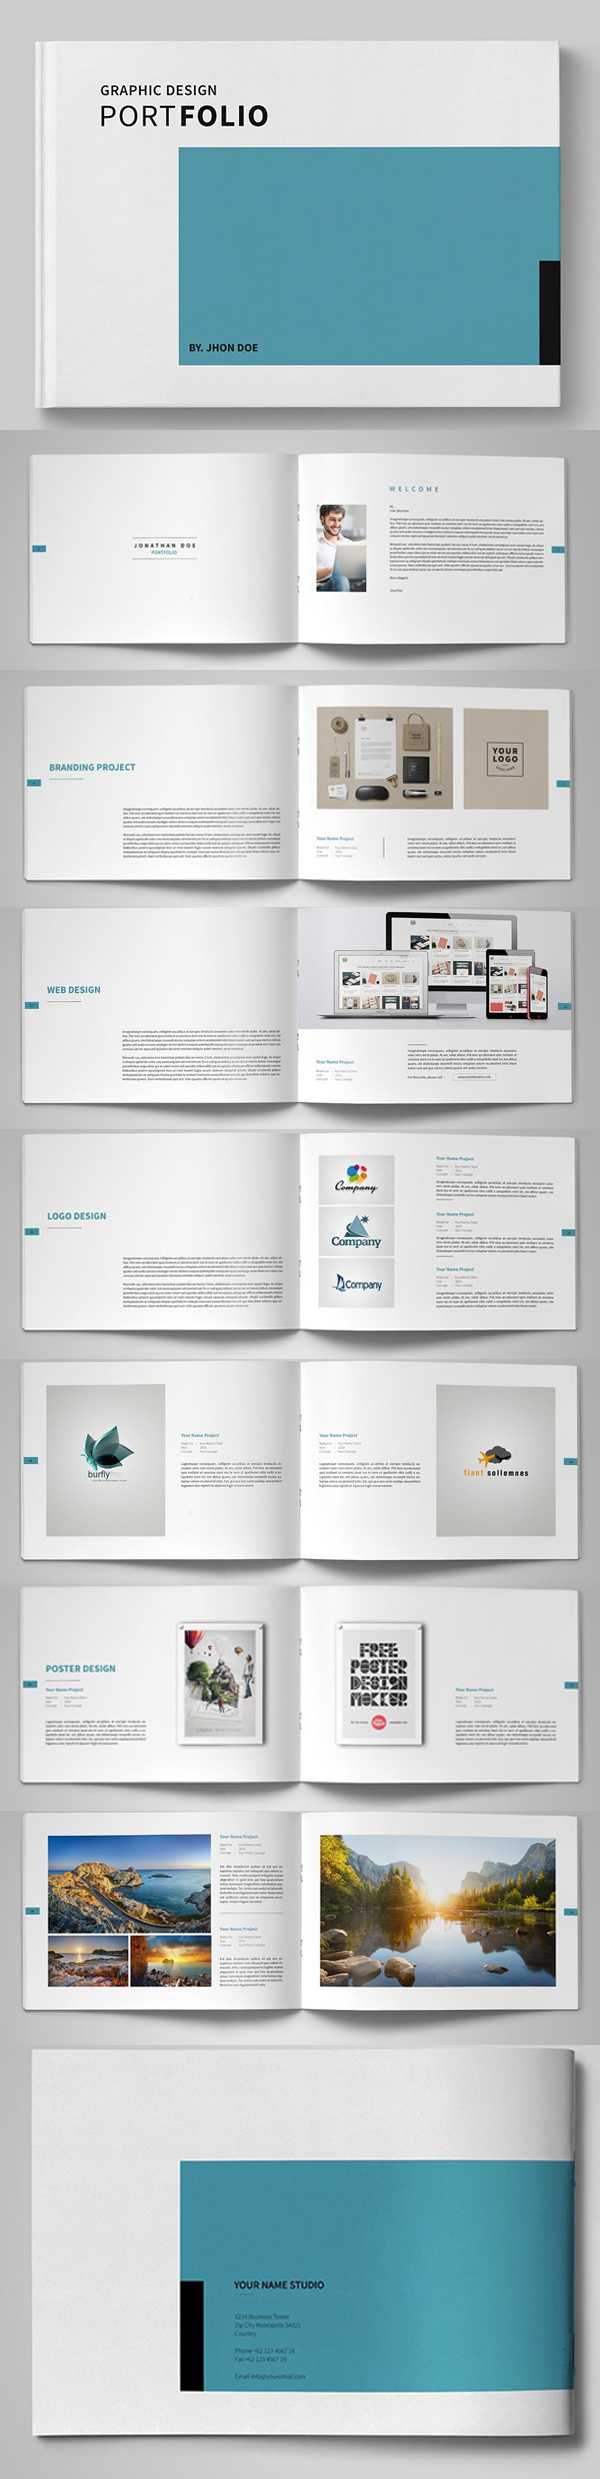 20 New Professional Catalog Brochure Templates | Design Within Brochure Template Indesign Free Download